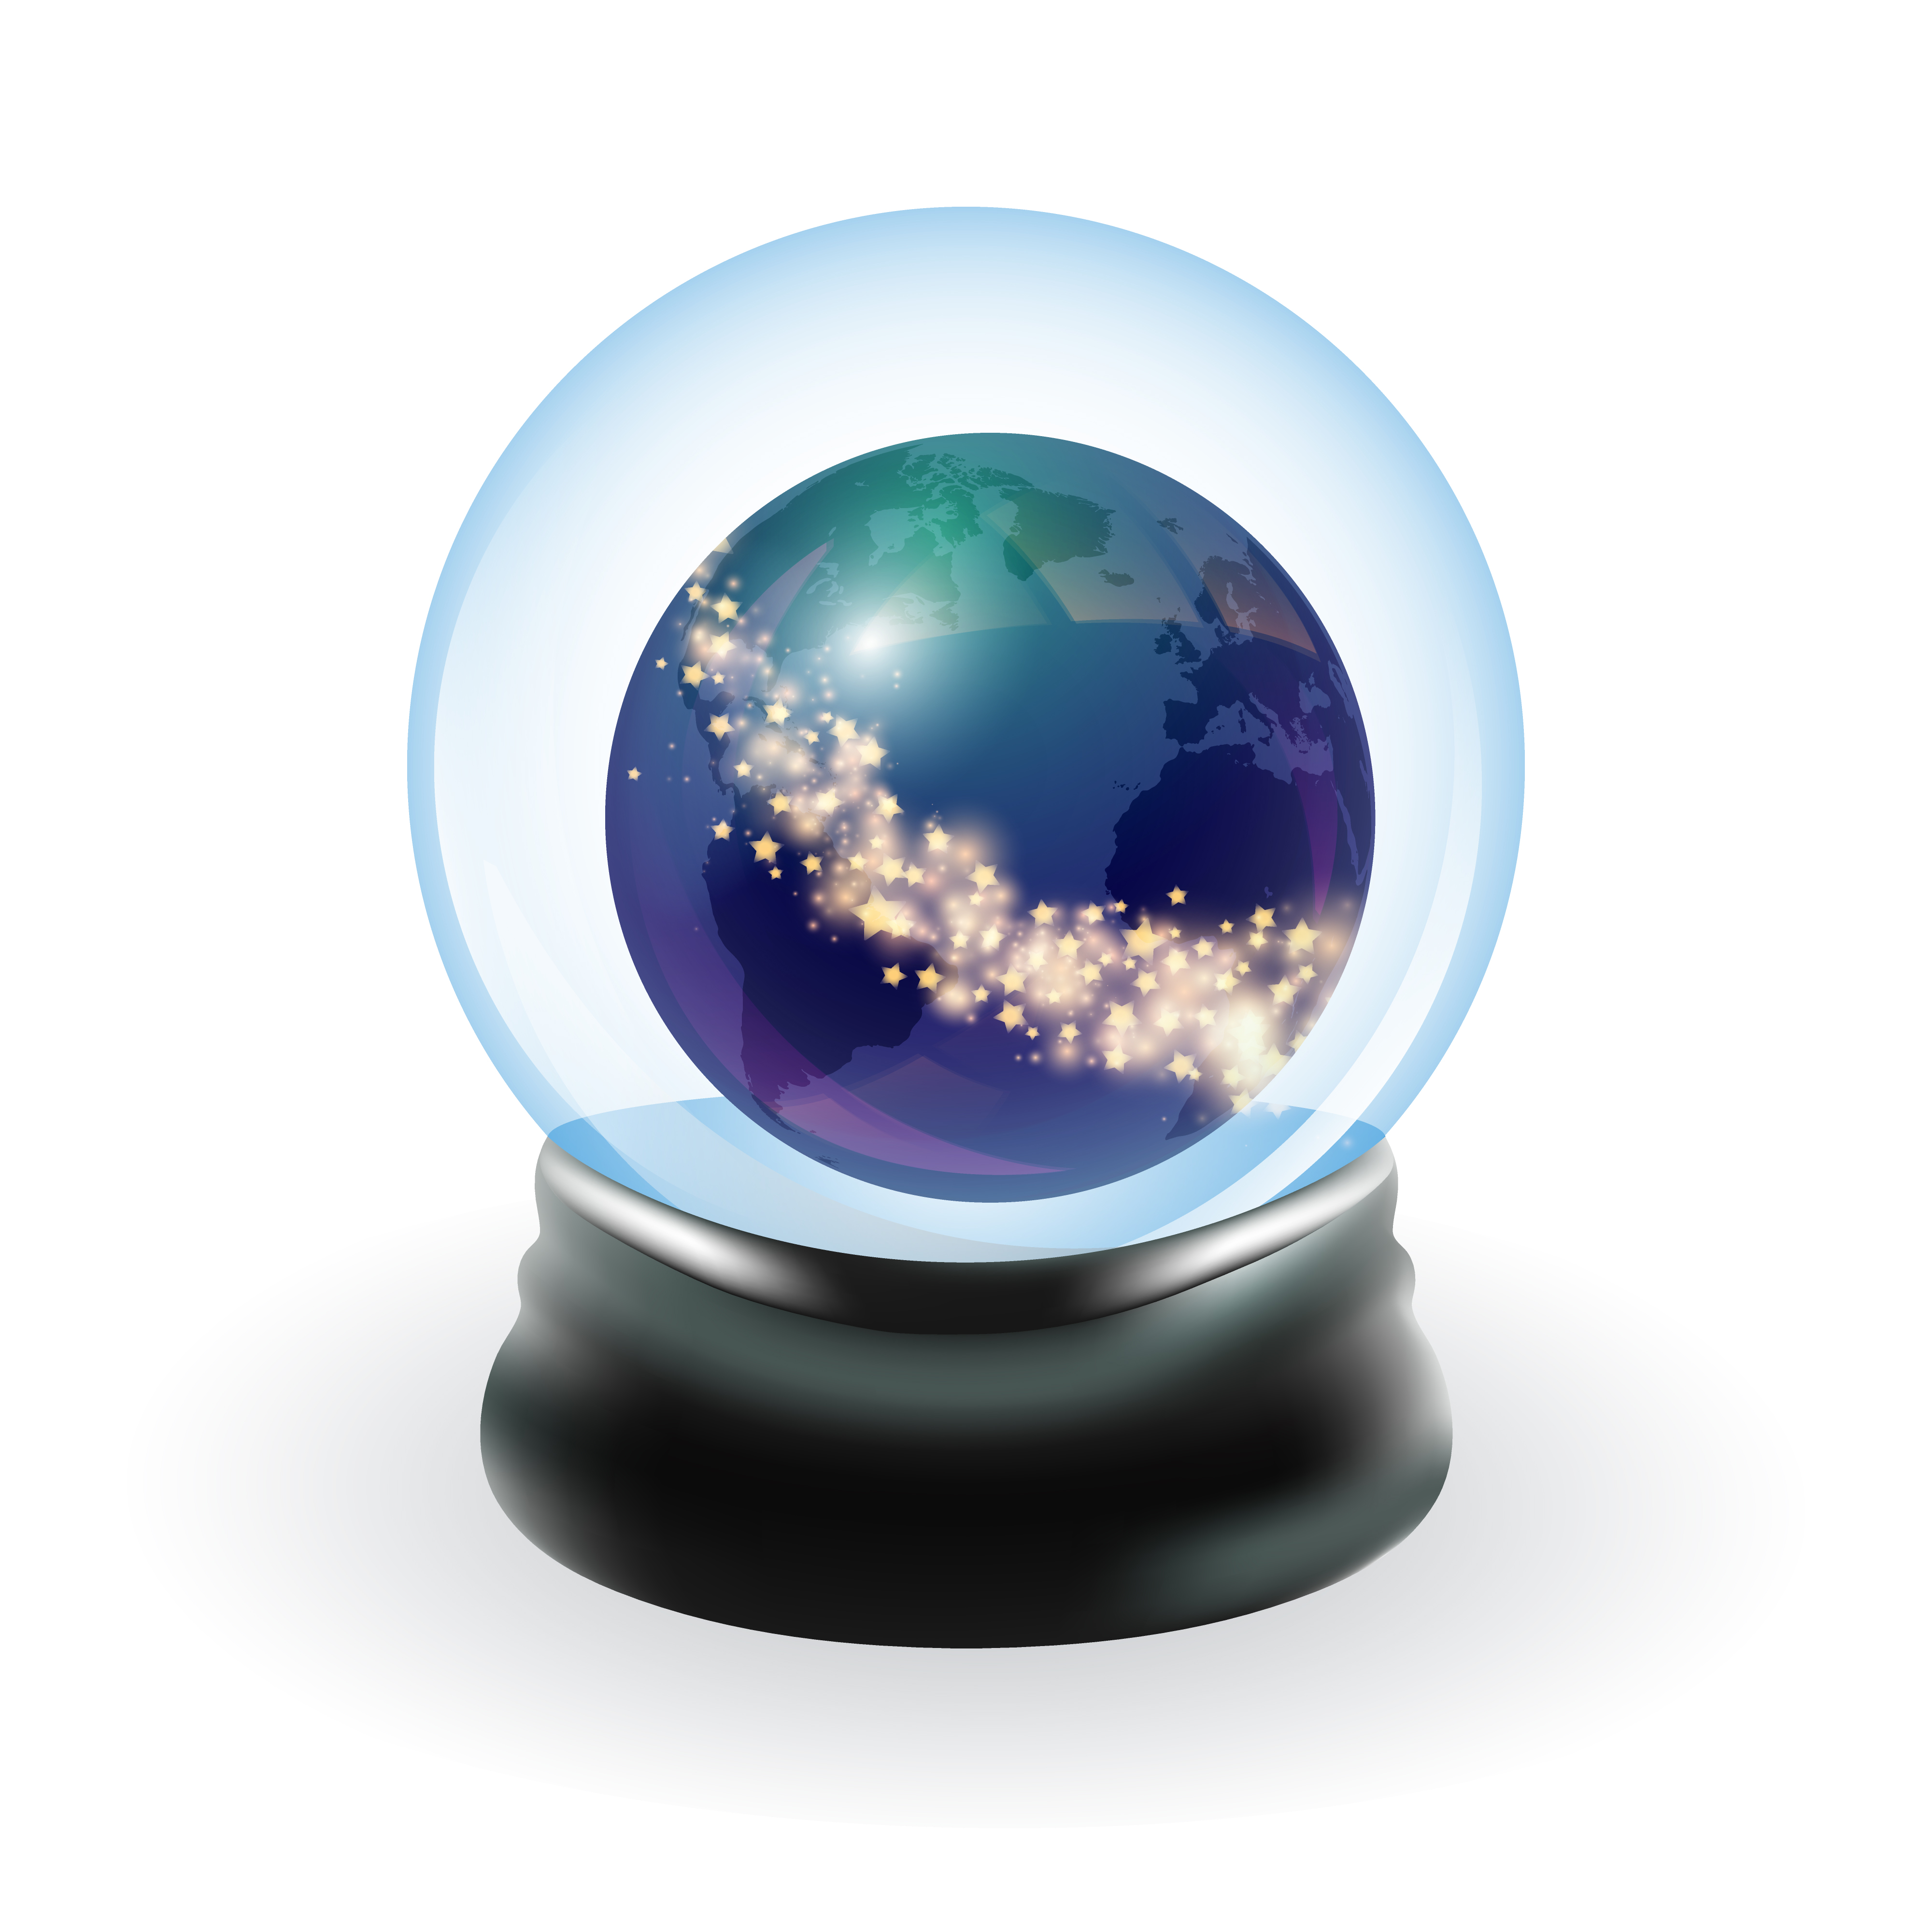 Download Snow globe template 557689 - Download Free Vectors ...